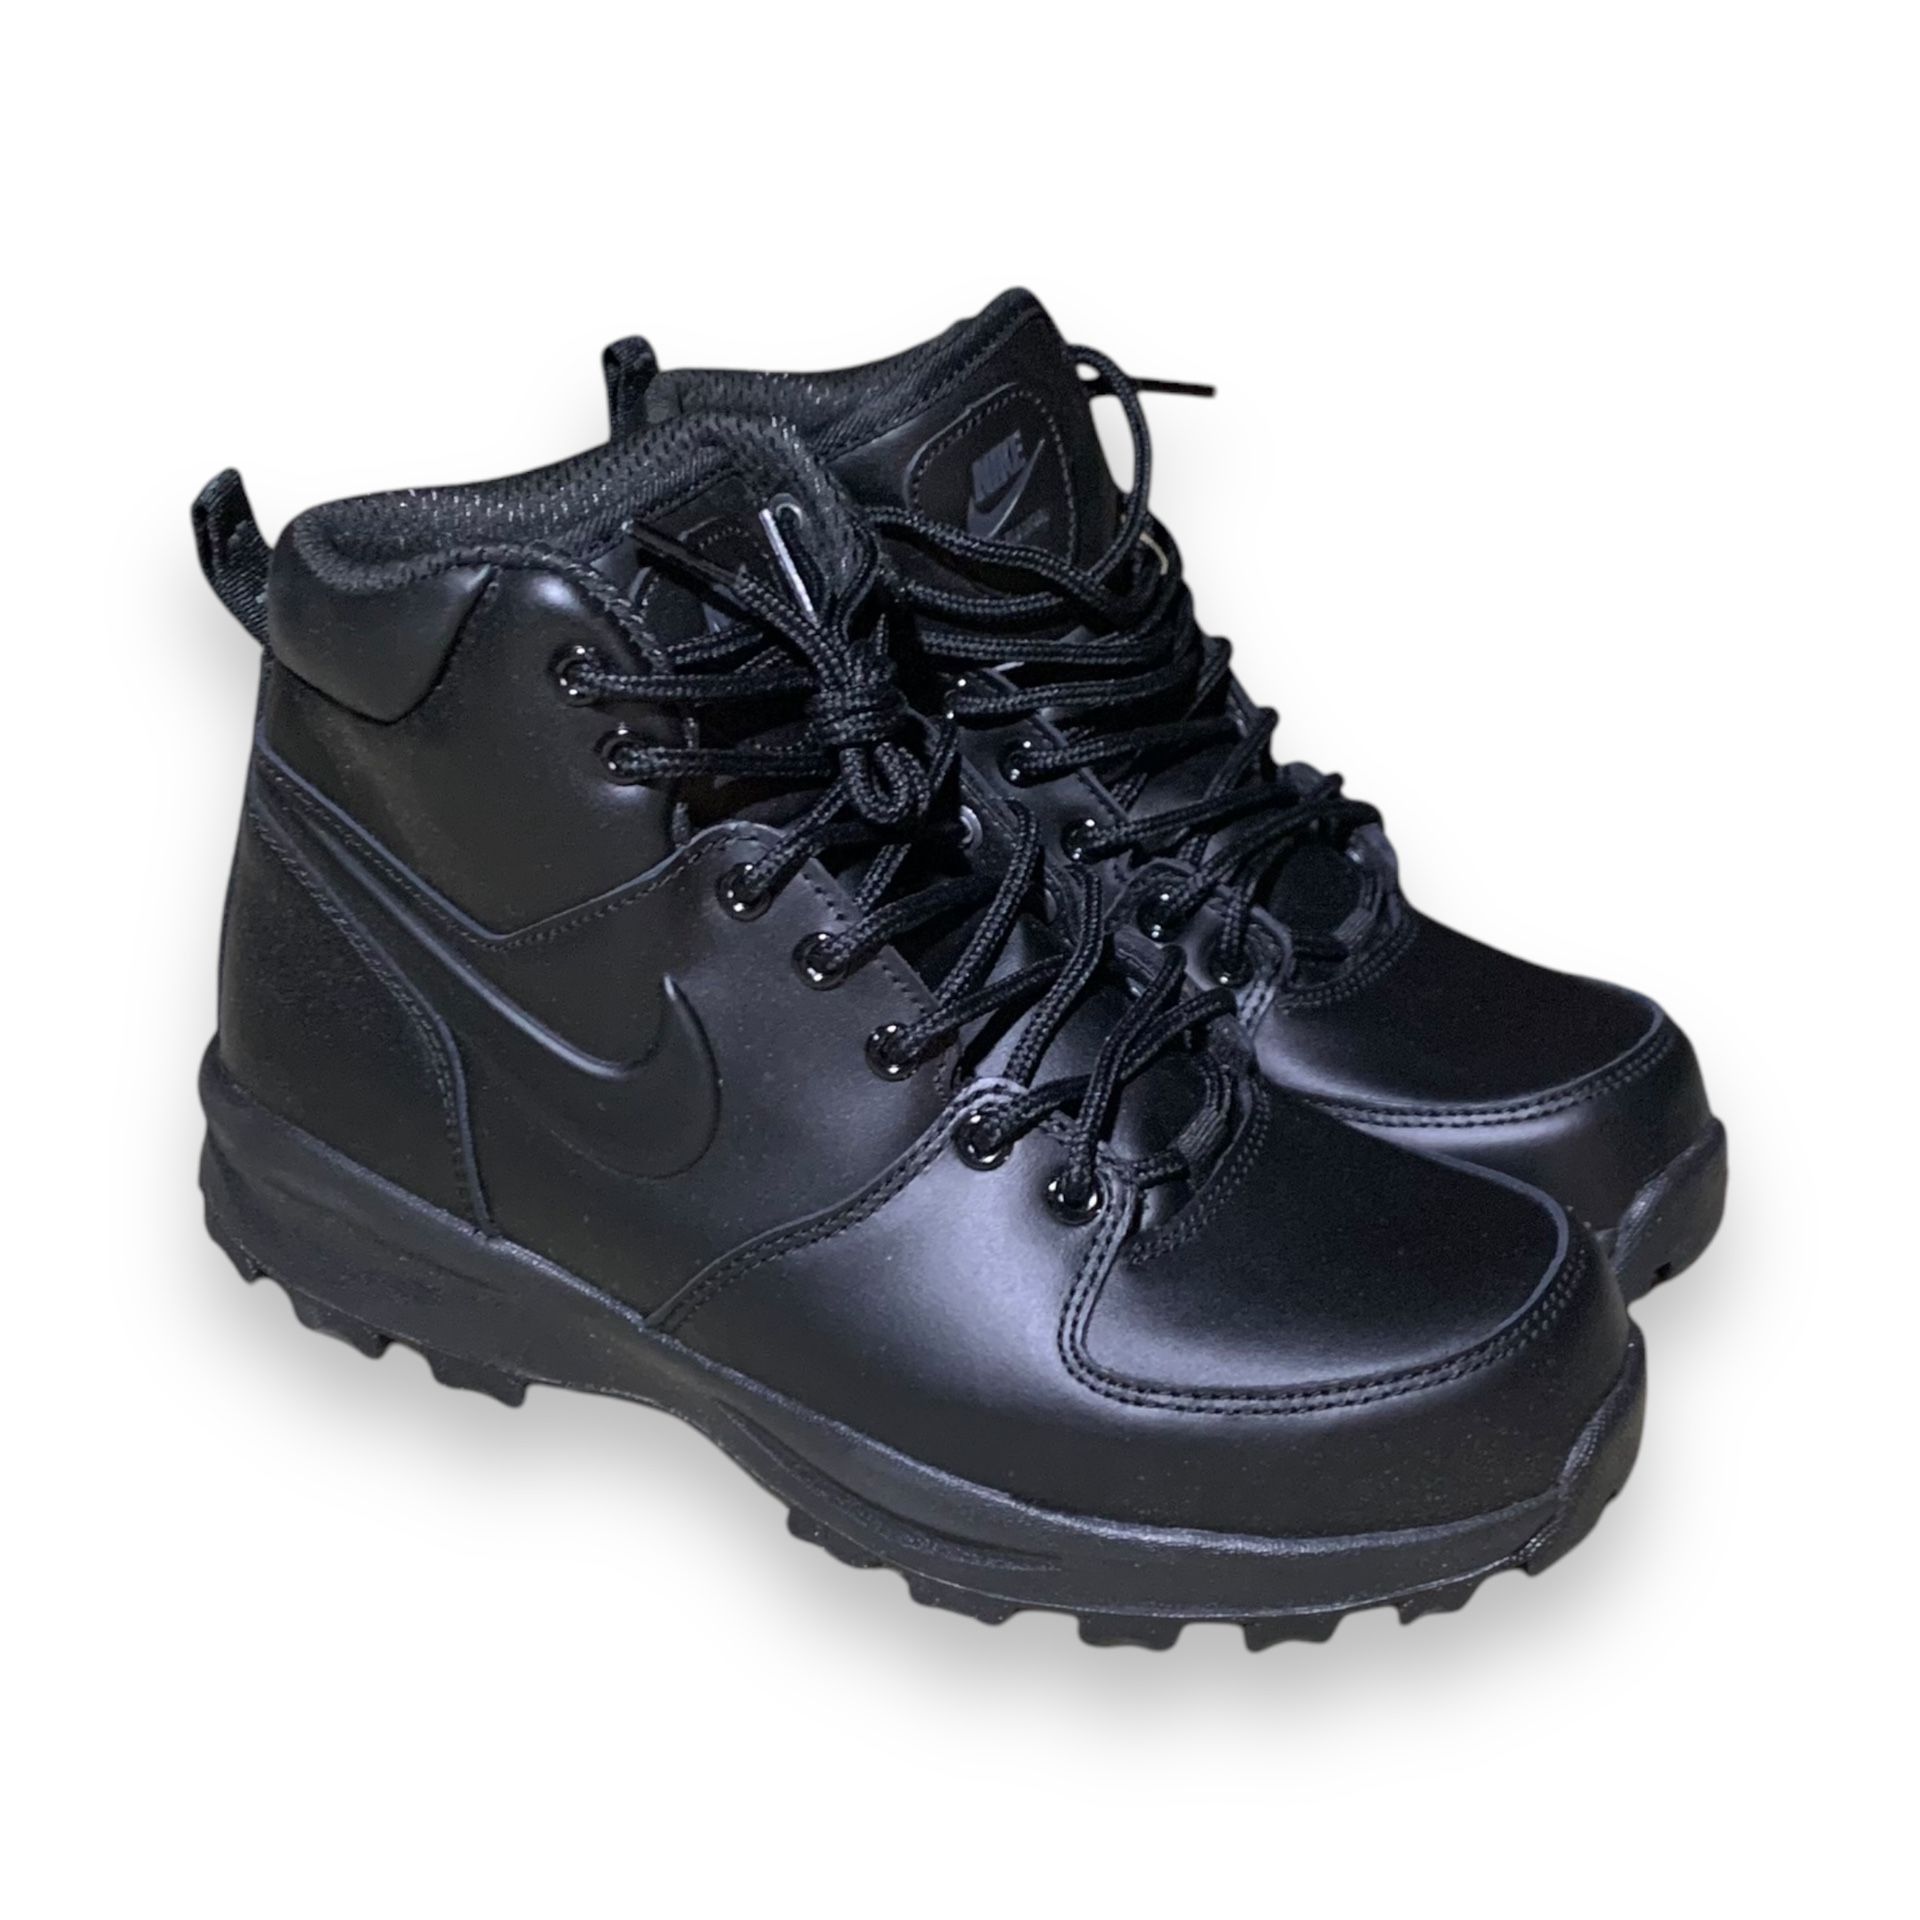 NEW Nike Manoa 454350-003 Triple Black Leather Mid Top Hiking Boots Men’s Sz 7.5